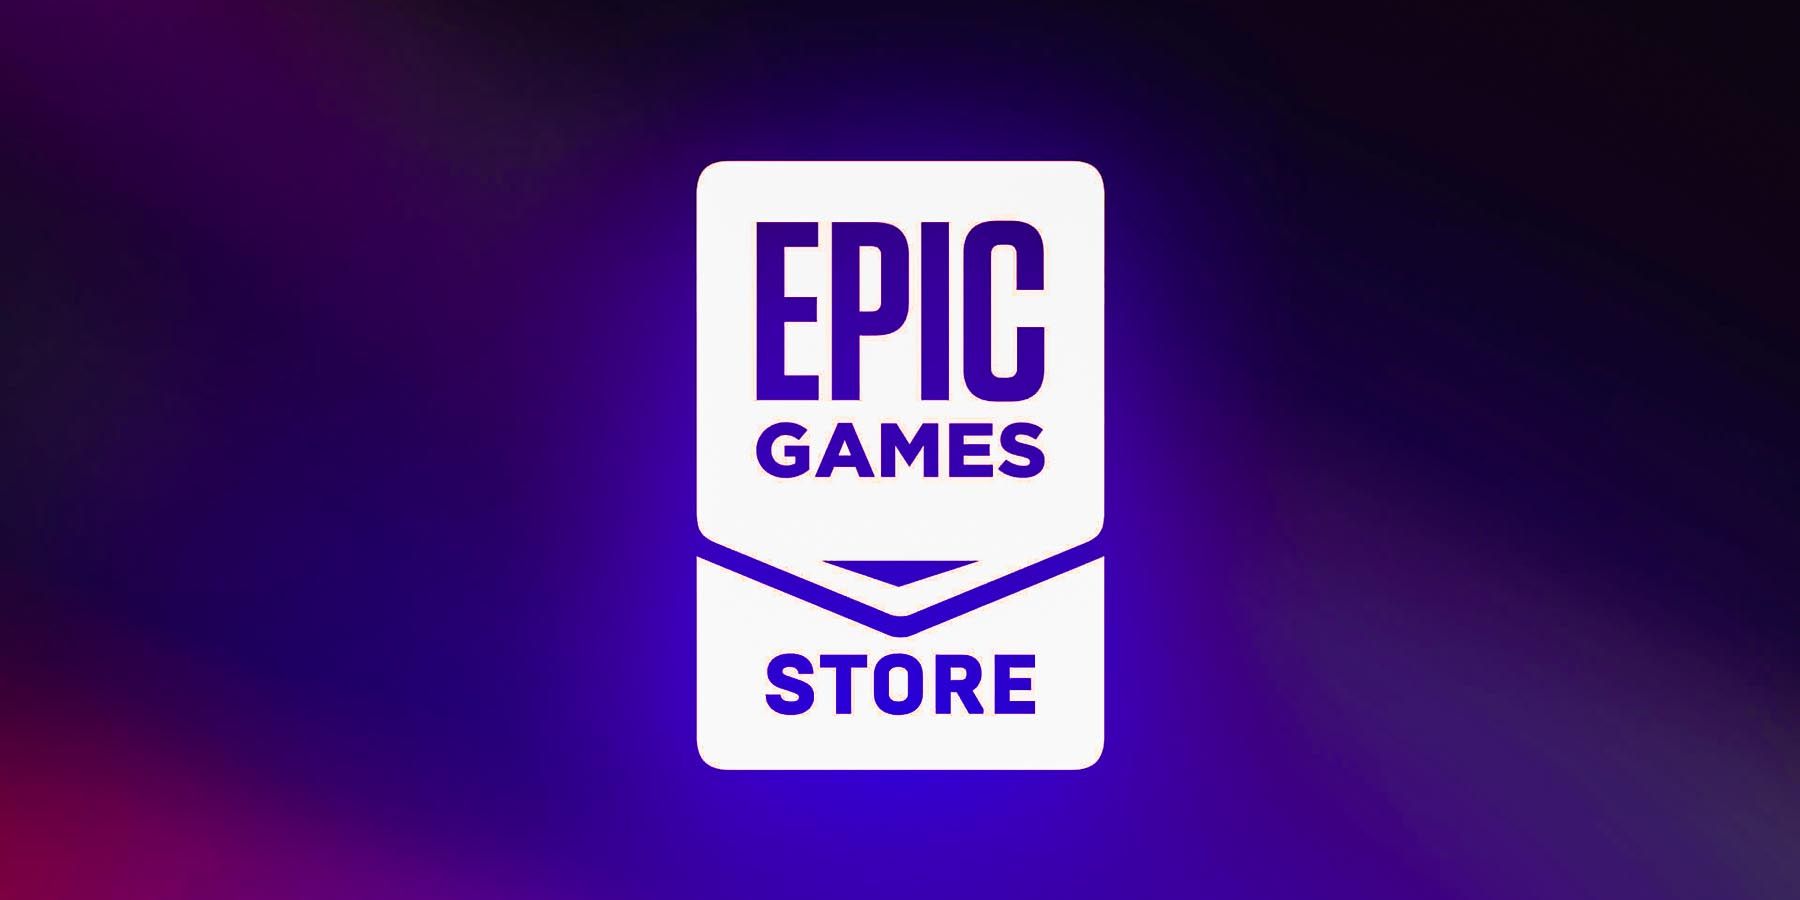 وأوضحت ألعاب Epic Games مباراتين مجانيتين في 23 يونيو